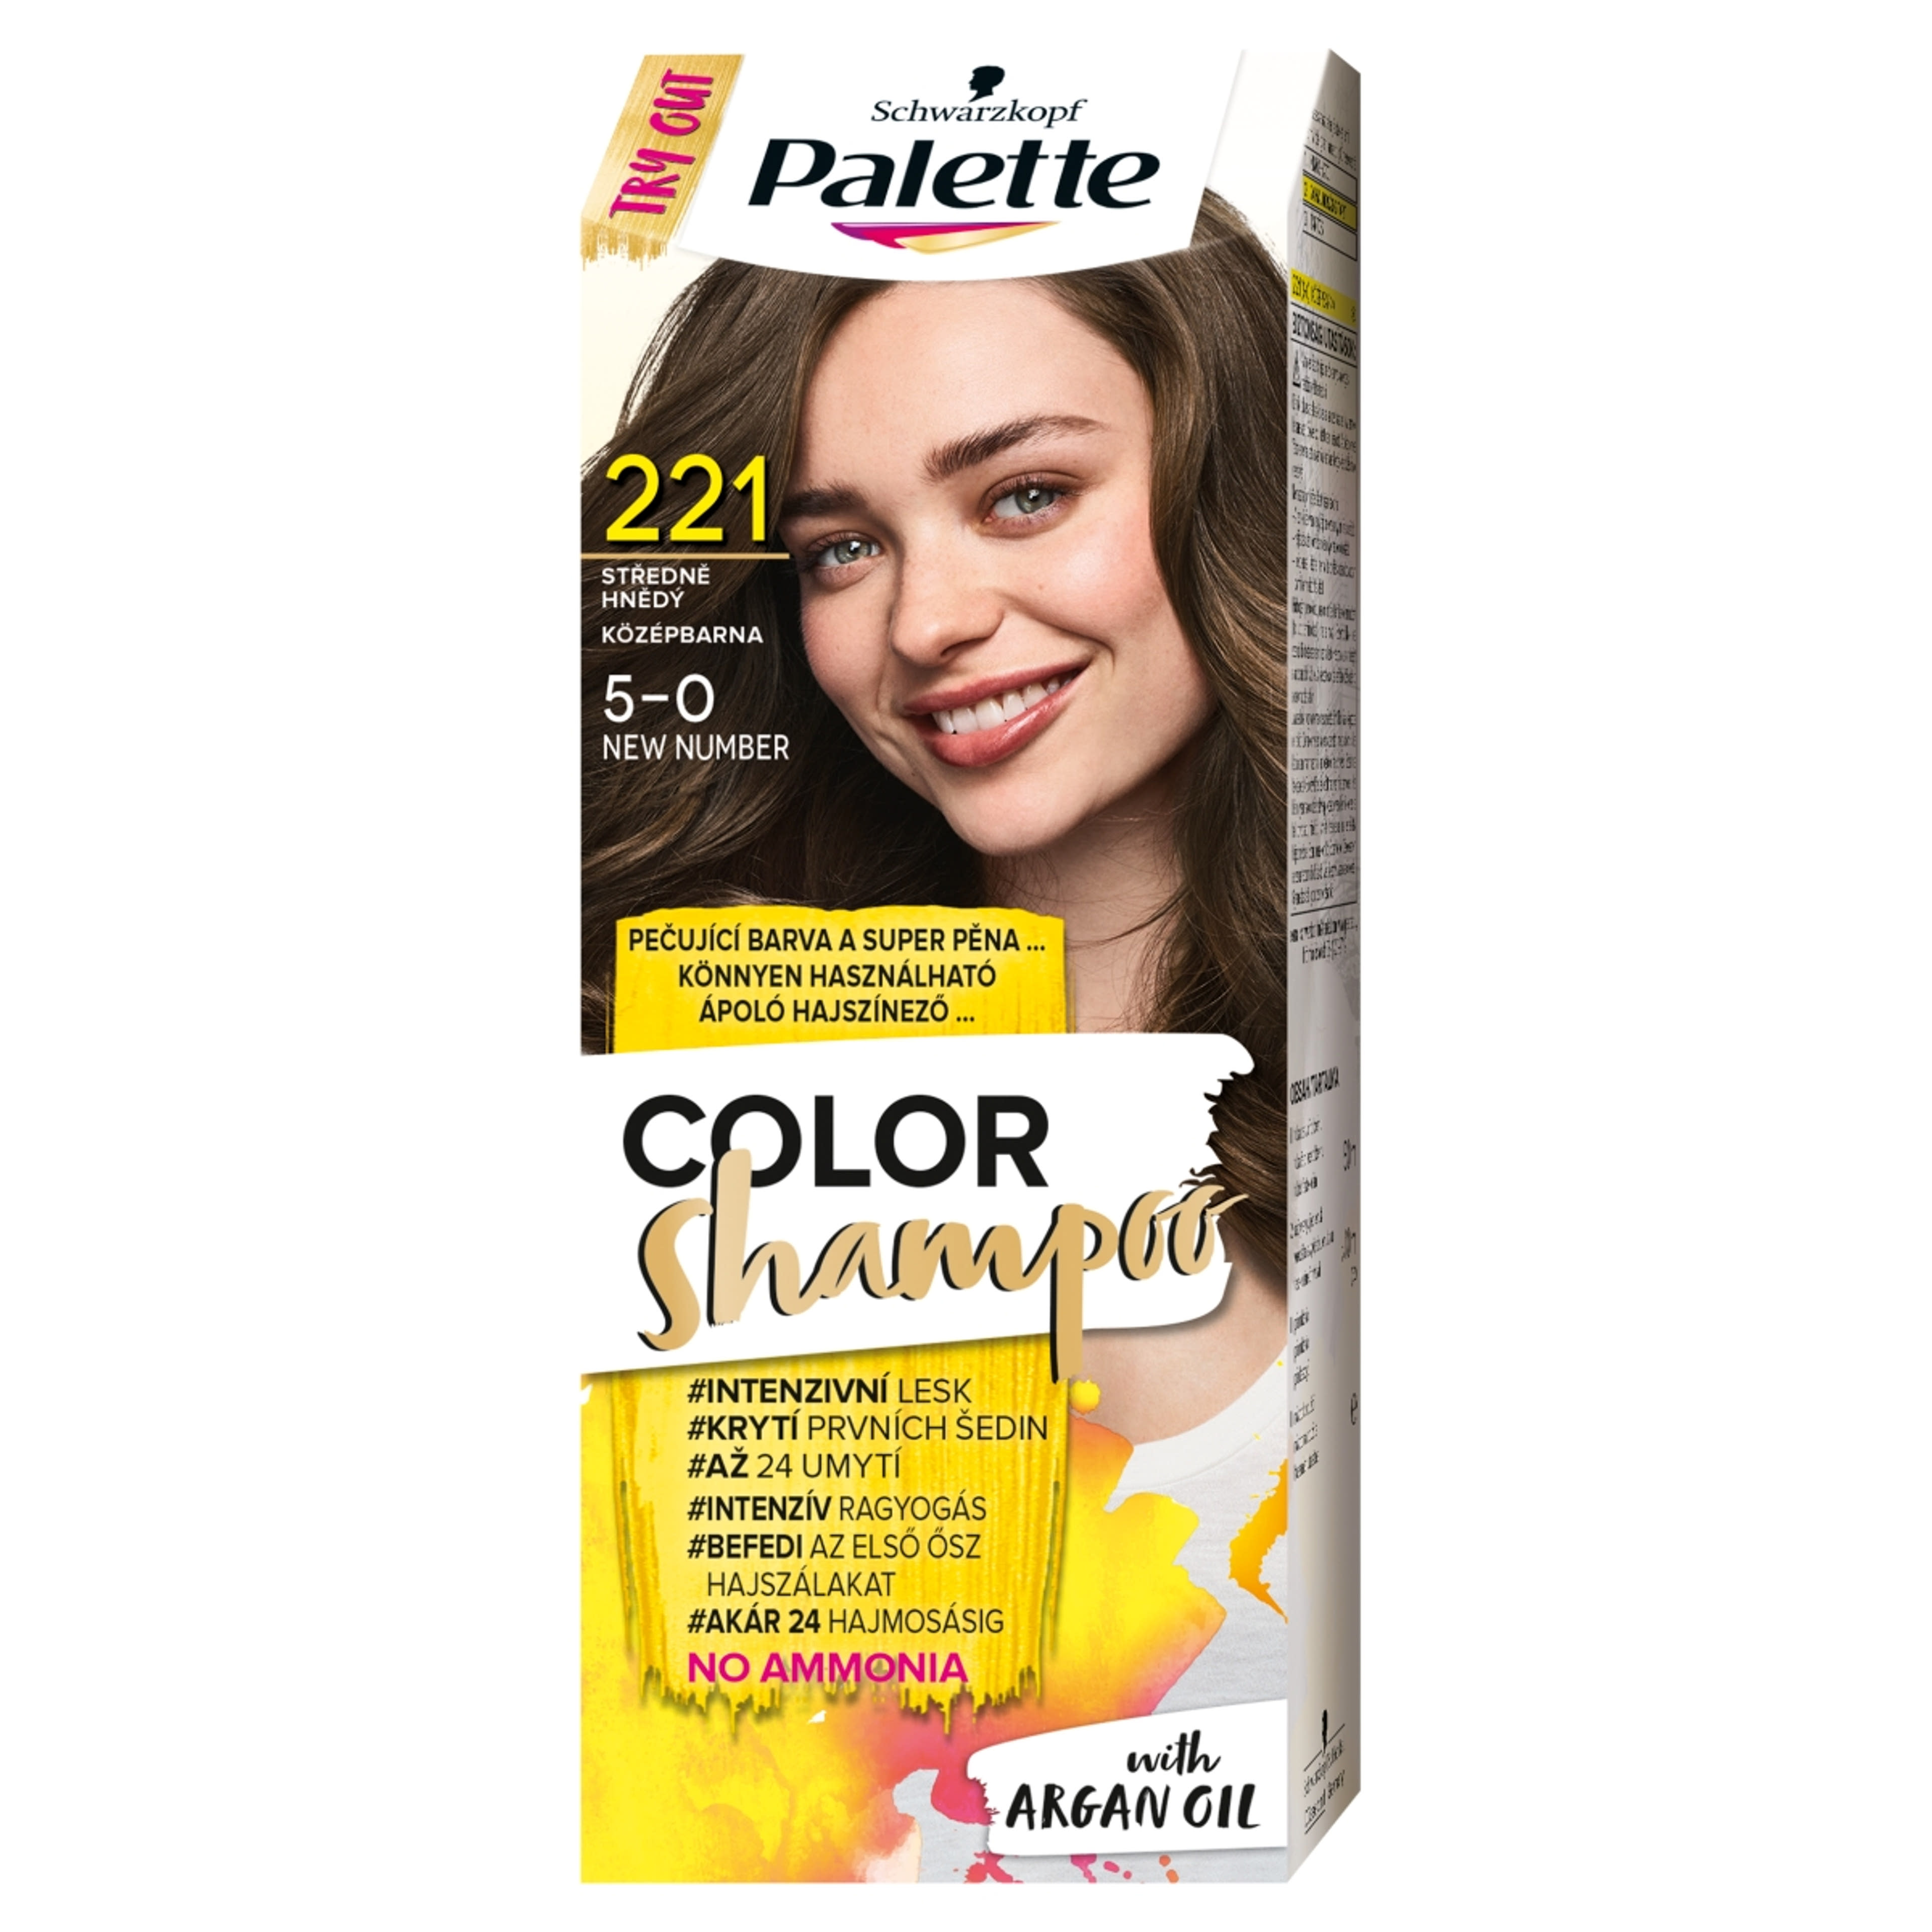 Schwarzkopf Palette Color Shampoo hajfesték 221 középbarna - 1 db-1